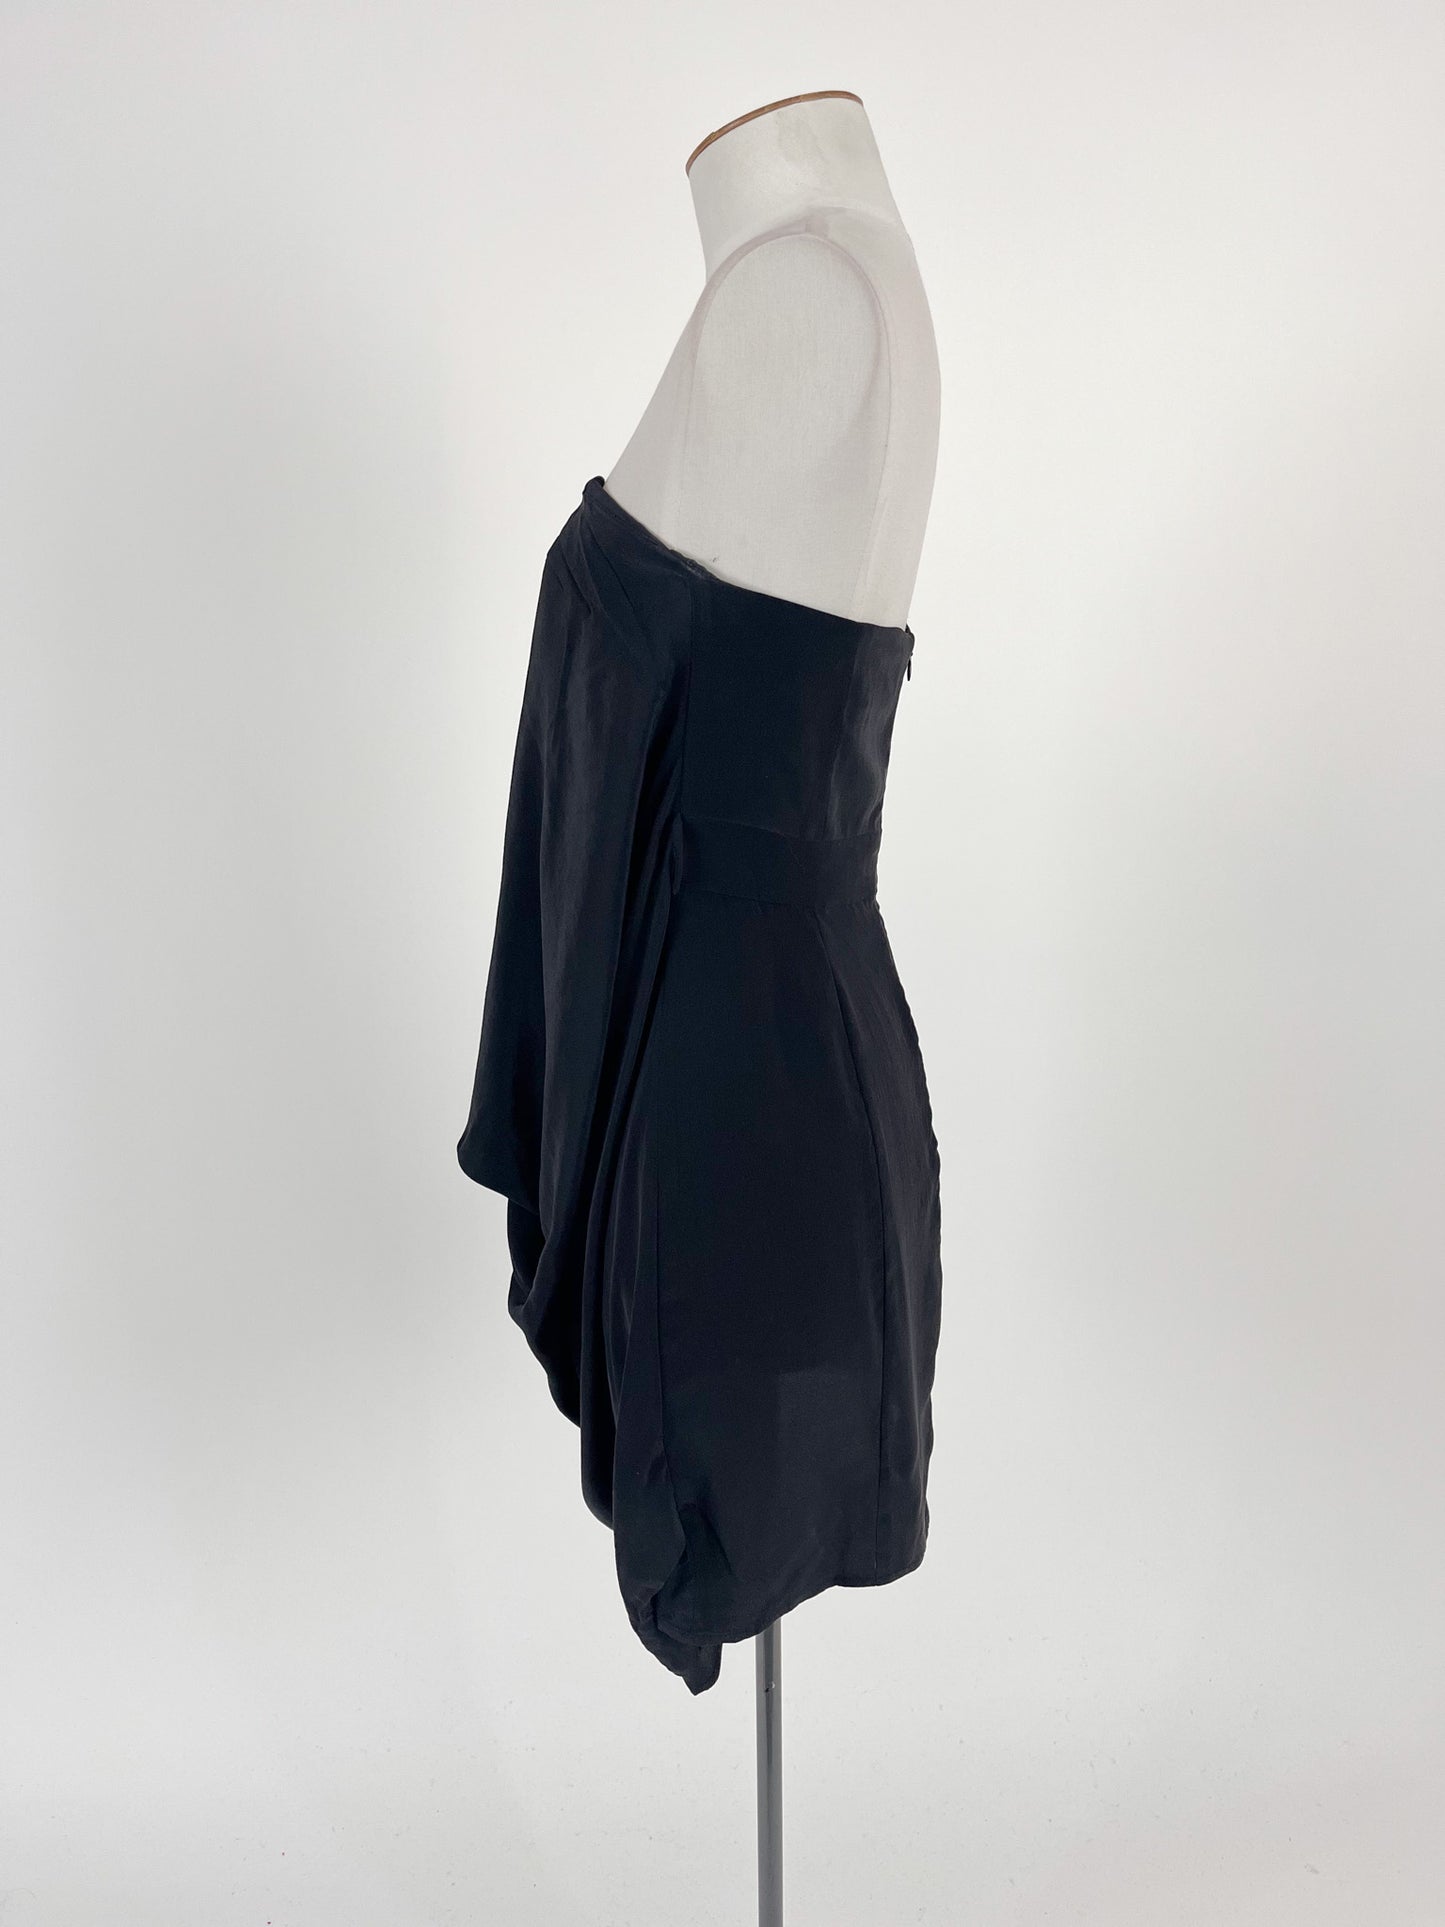 Zimmermann | Black Cocktail/Formal Dress | Size 12